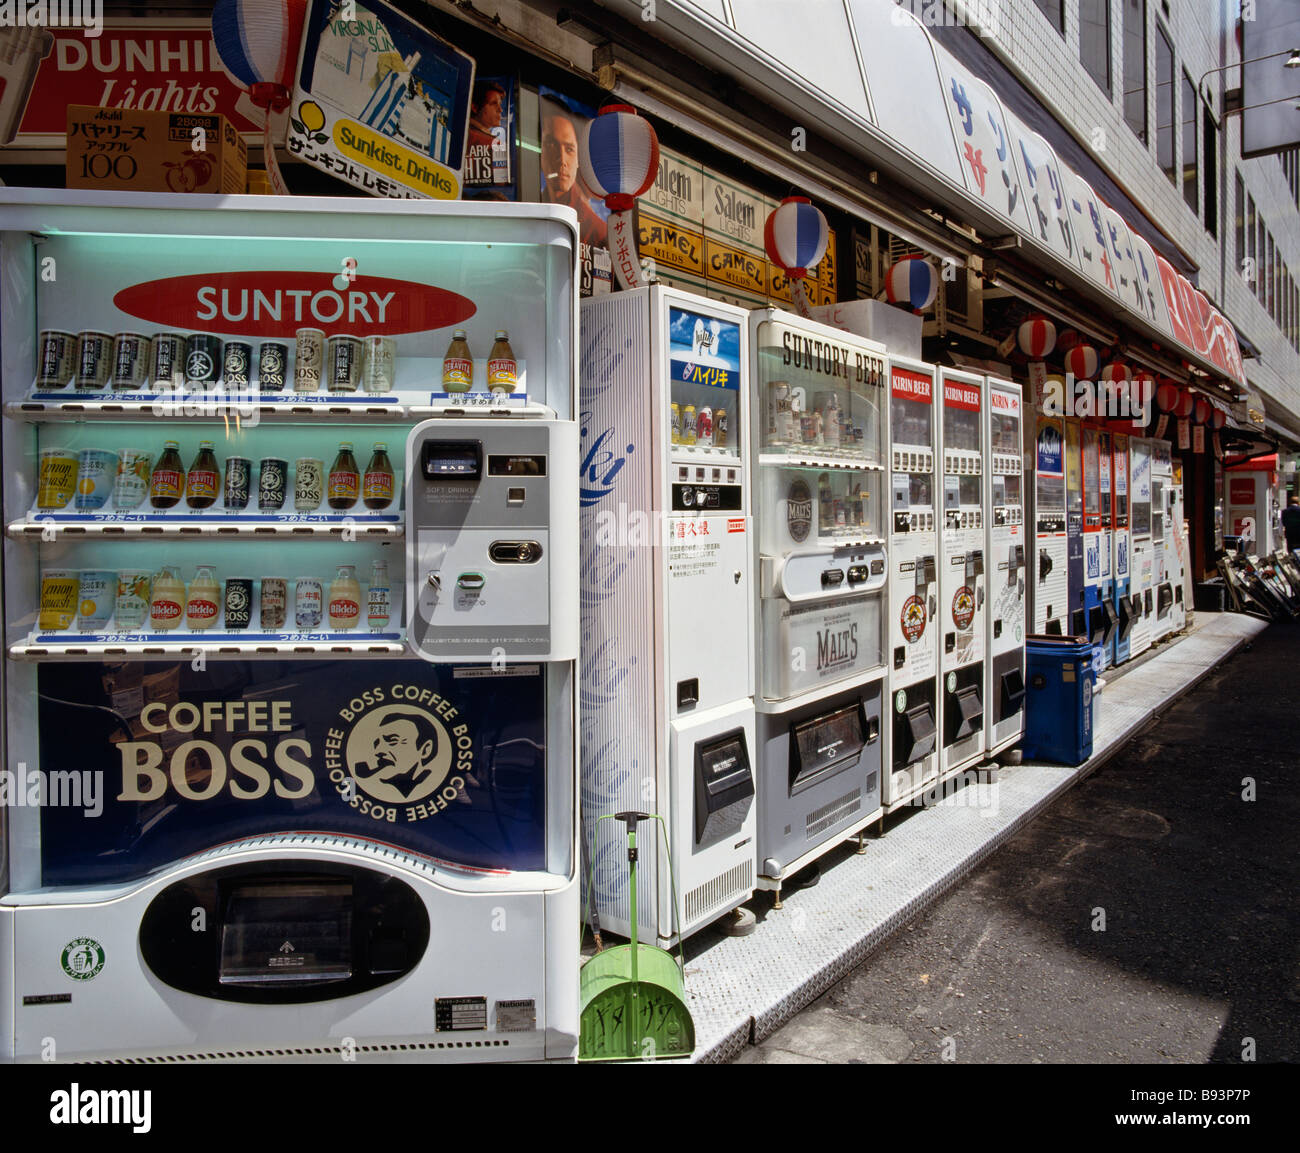 Alcoholic vending machine – A Geek in Japan